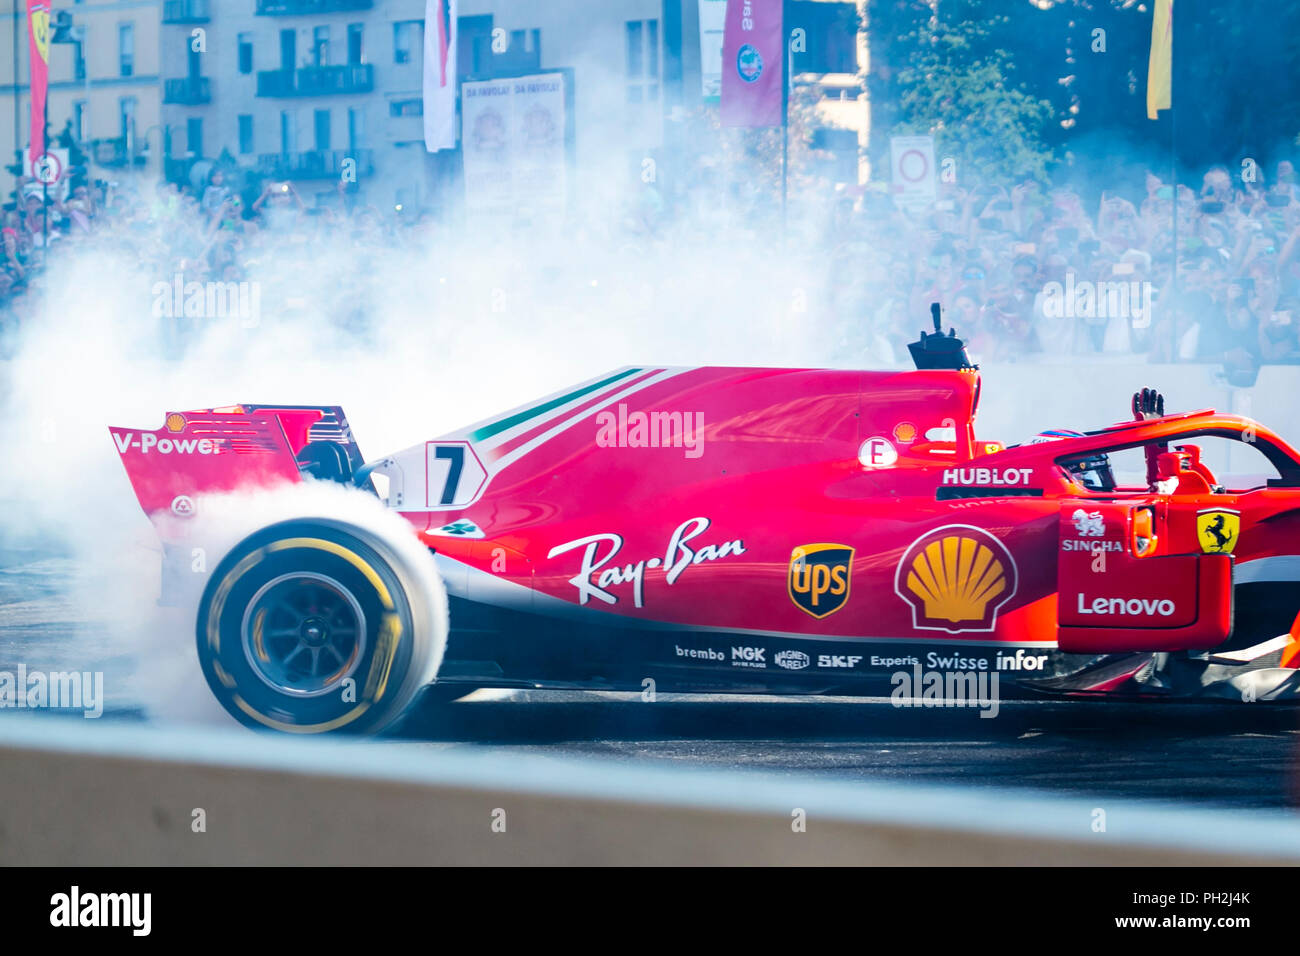 Milan, Italy, 29th August 2018 - Ferrari F1 Team doing a live performance at F1 Milan Festival - Valeria Portinari Alamy Live News Stock Photo